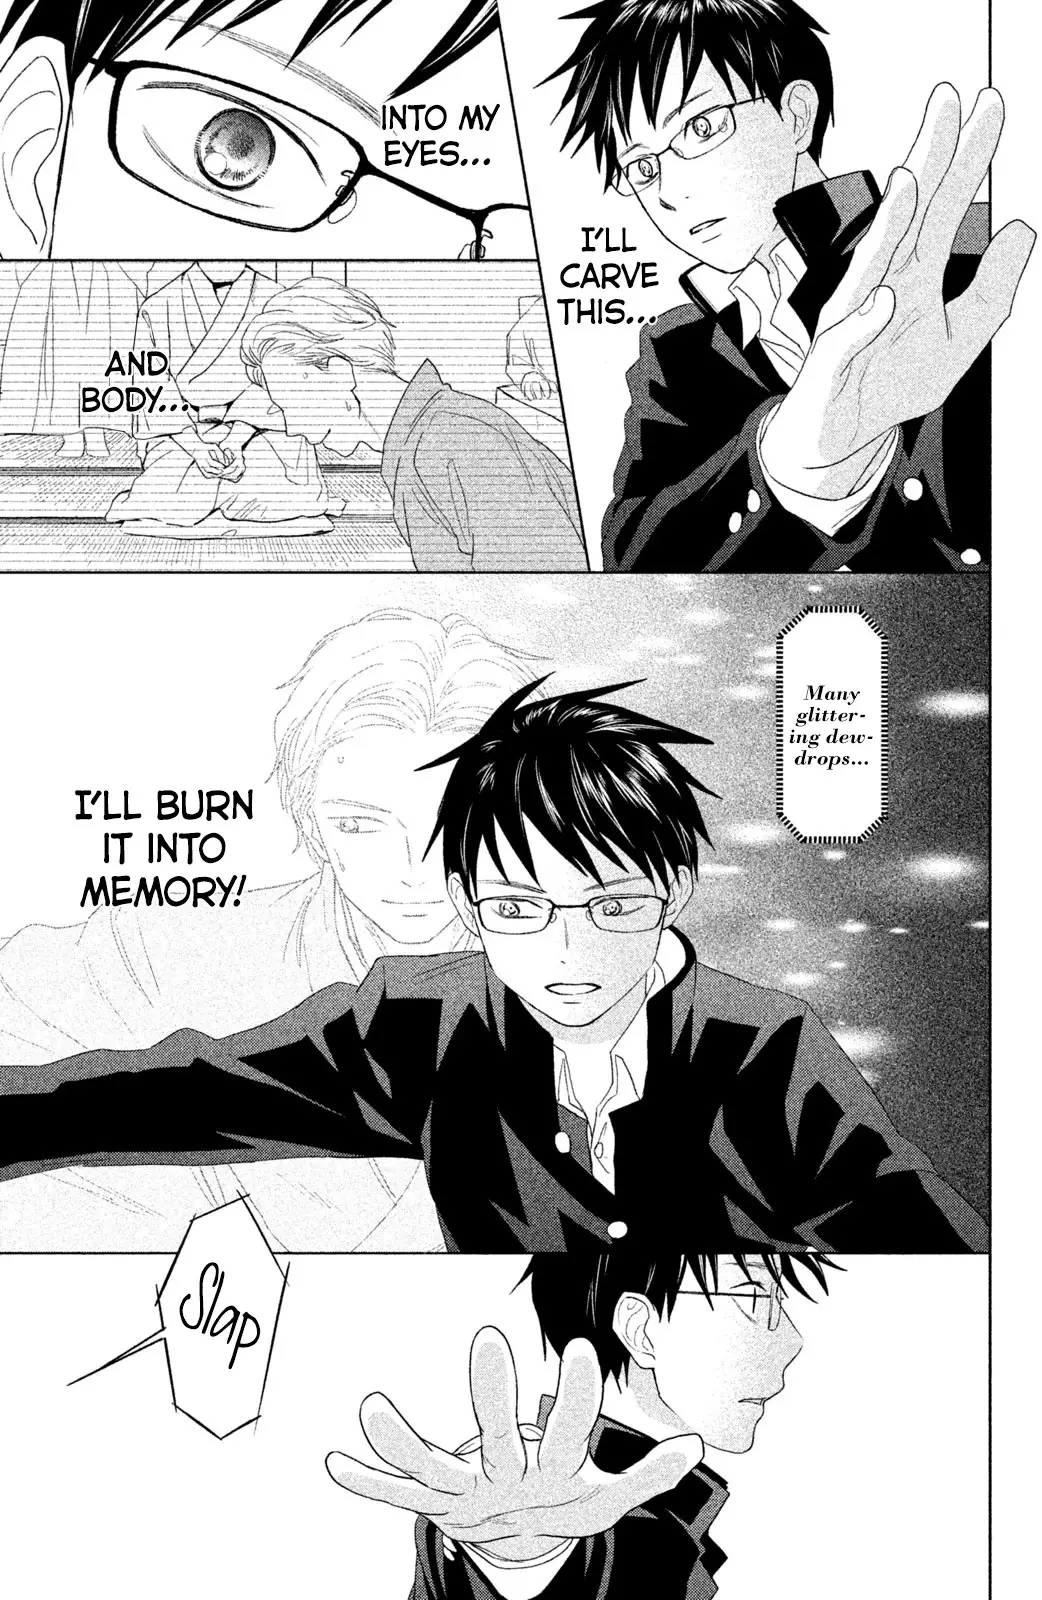 Chihayafuru: Middle School Arc - 9 page 8